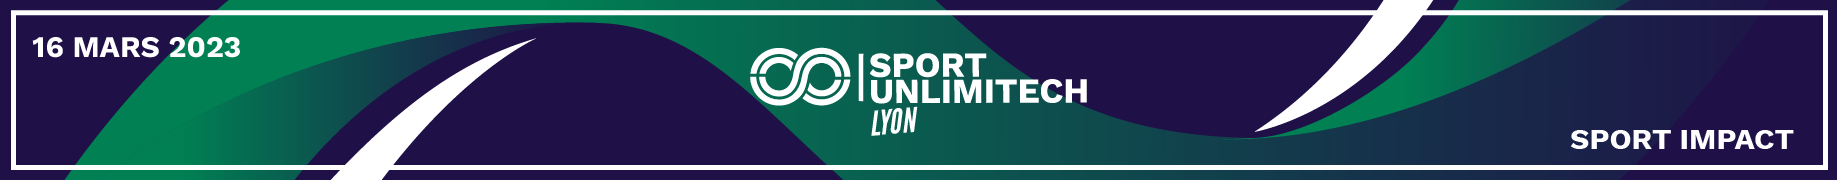 Sport Unlimitech Lyon 2023